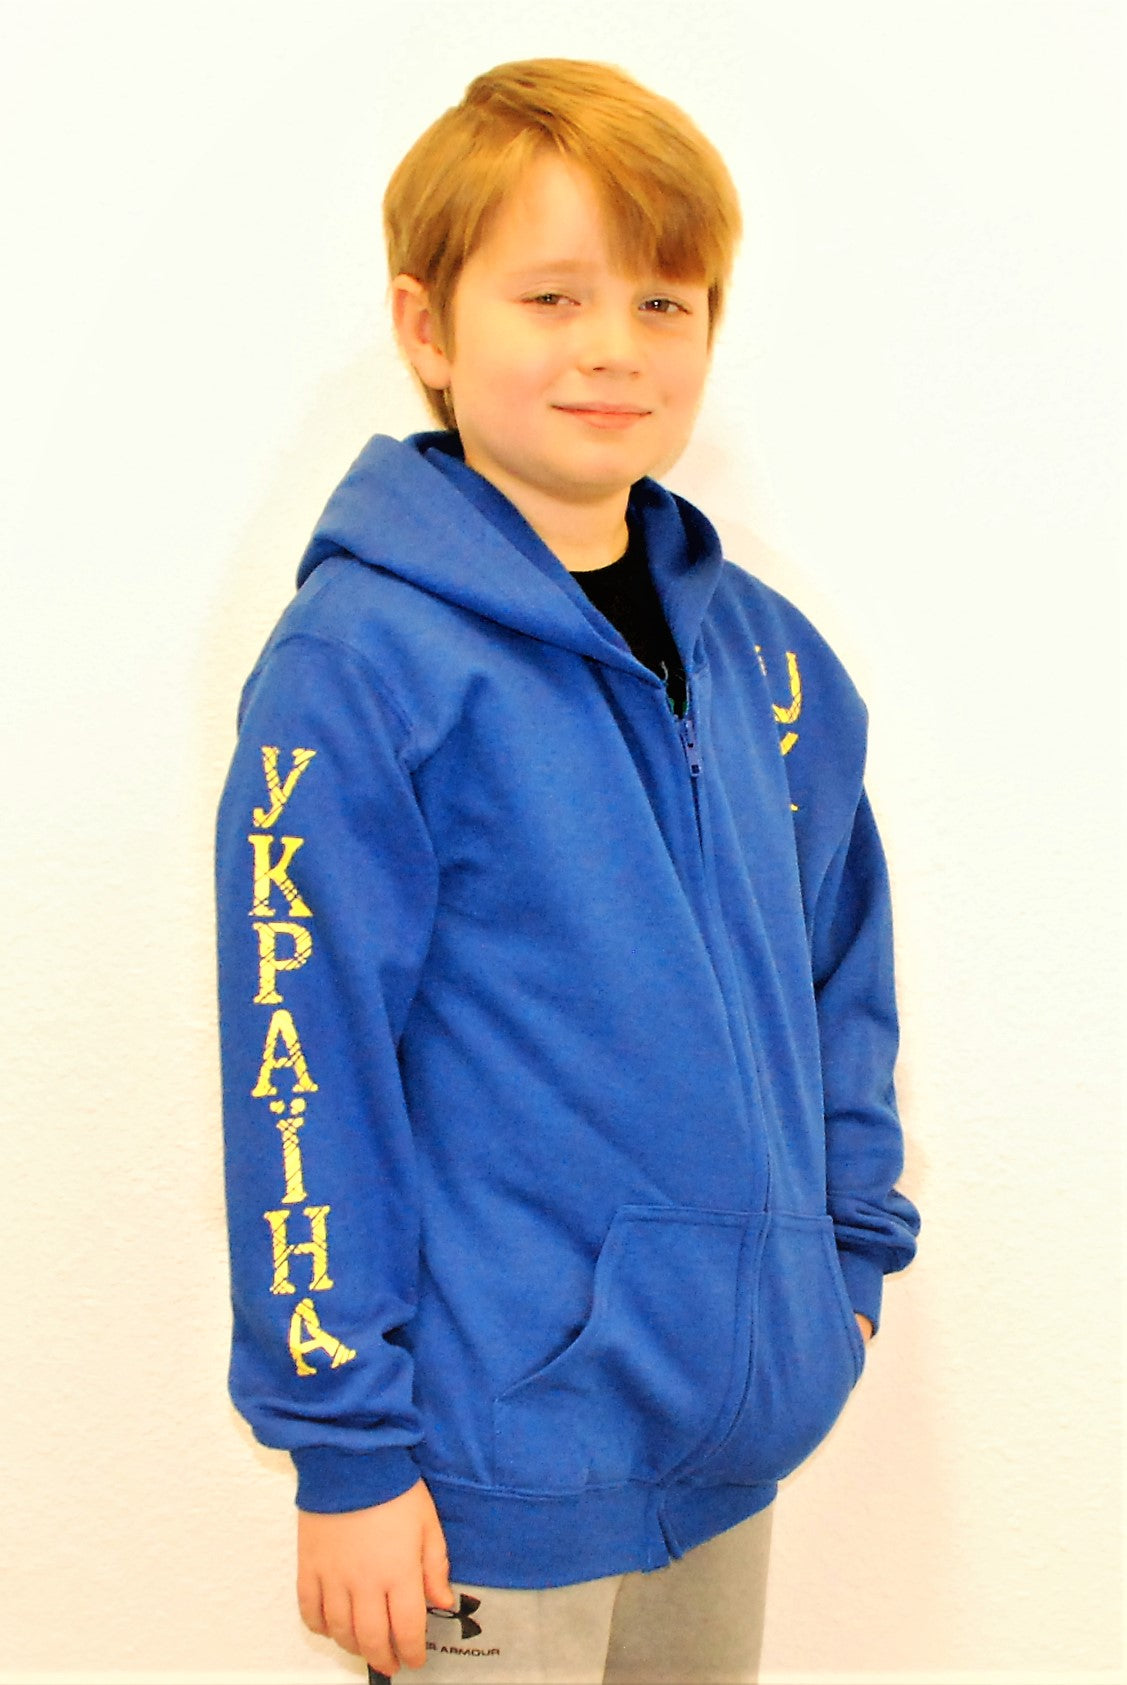 Kids' zip-up hooded jacket "Ukraine". Unisex. Blue